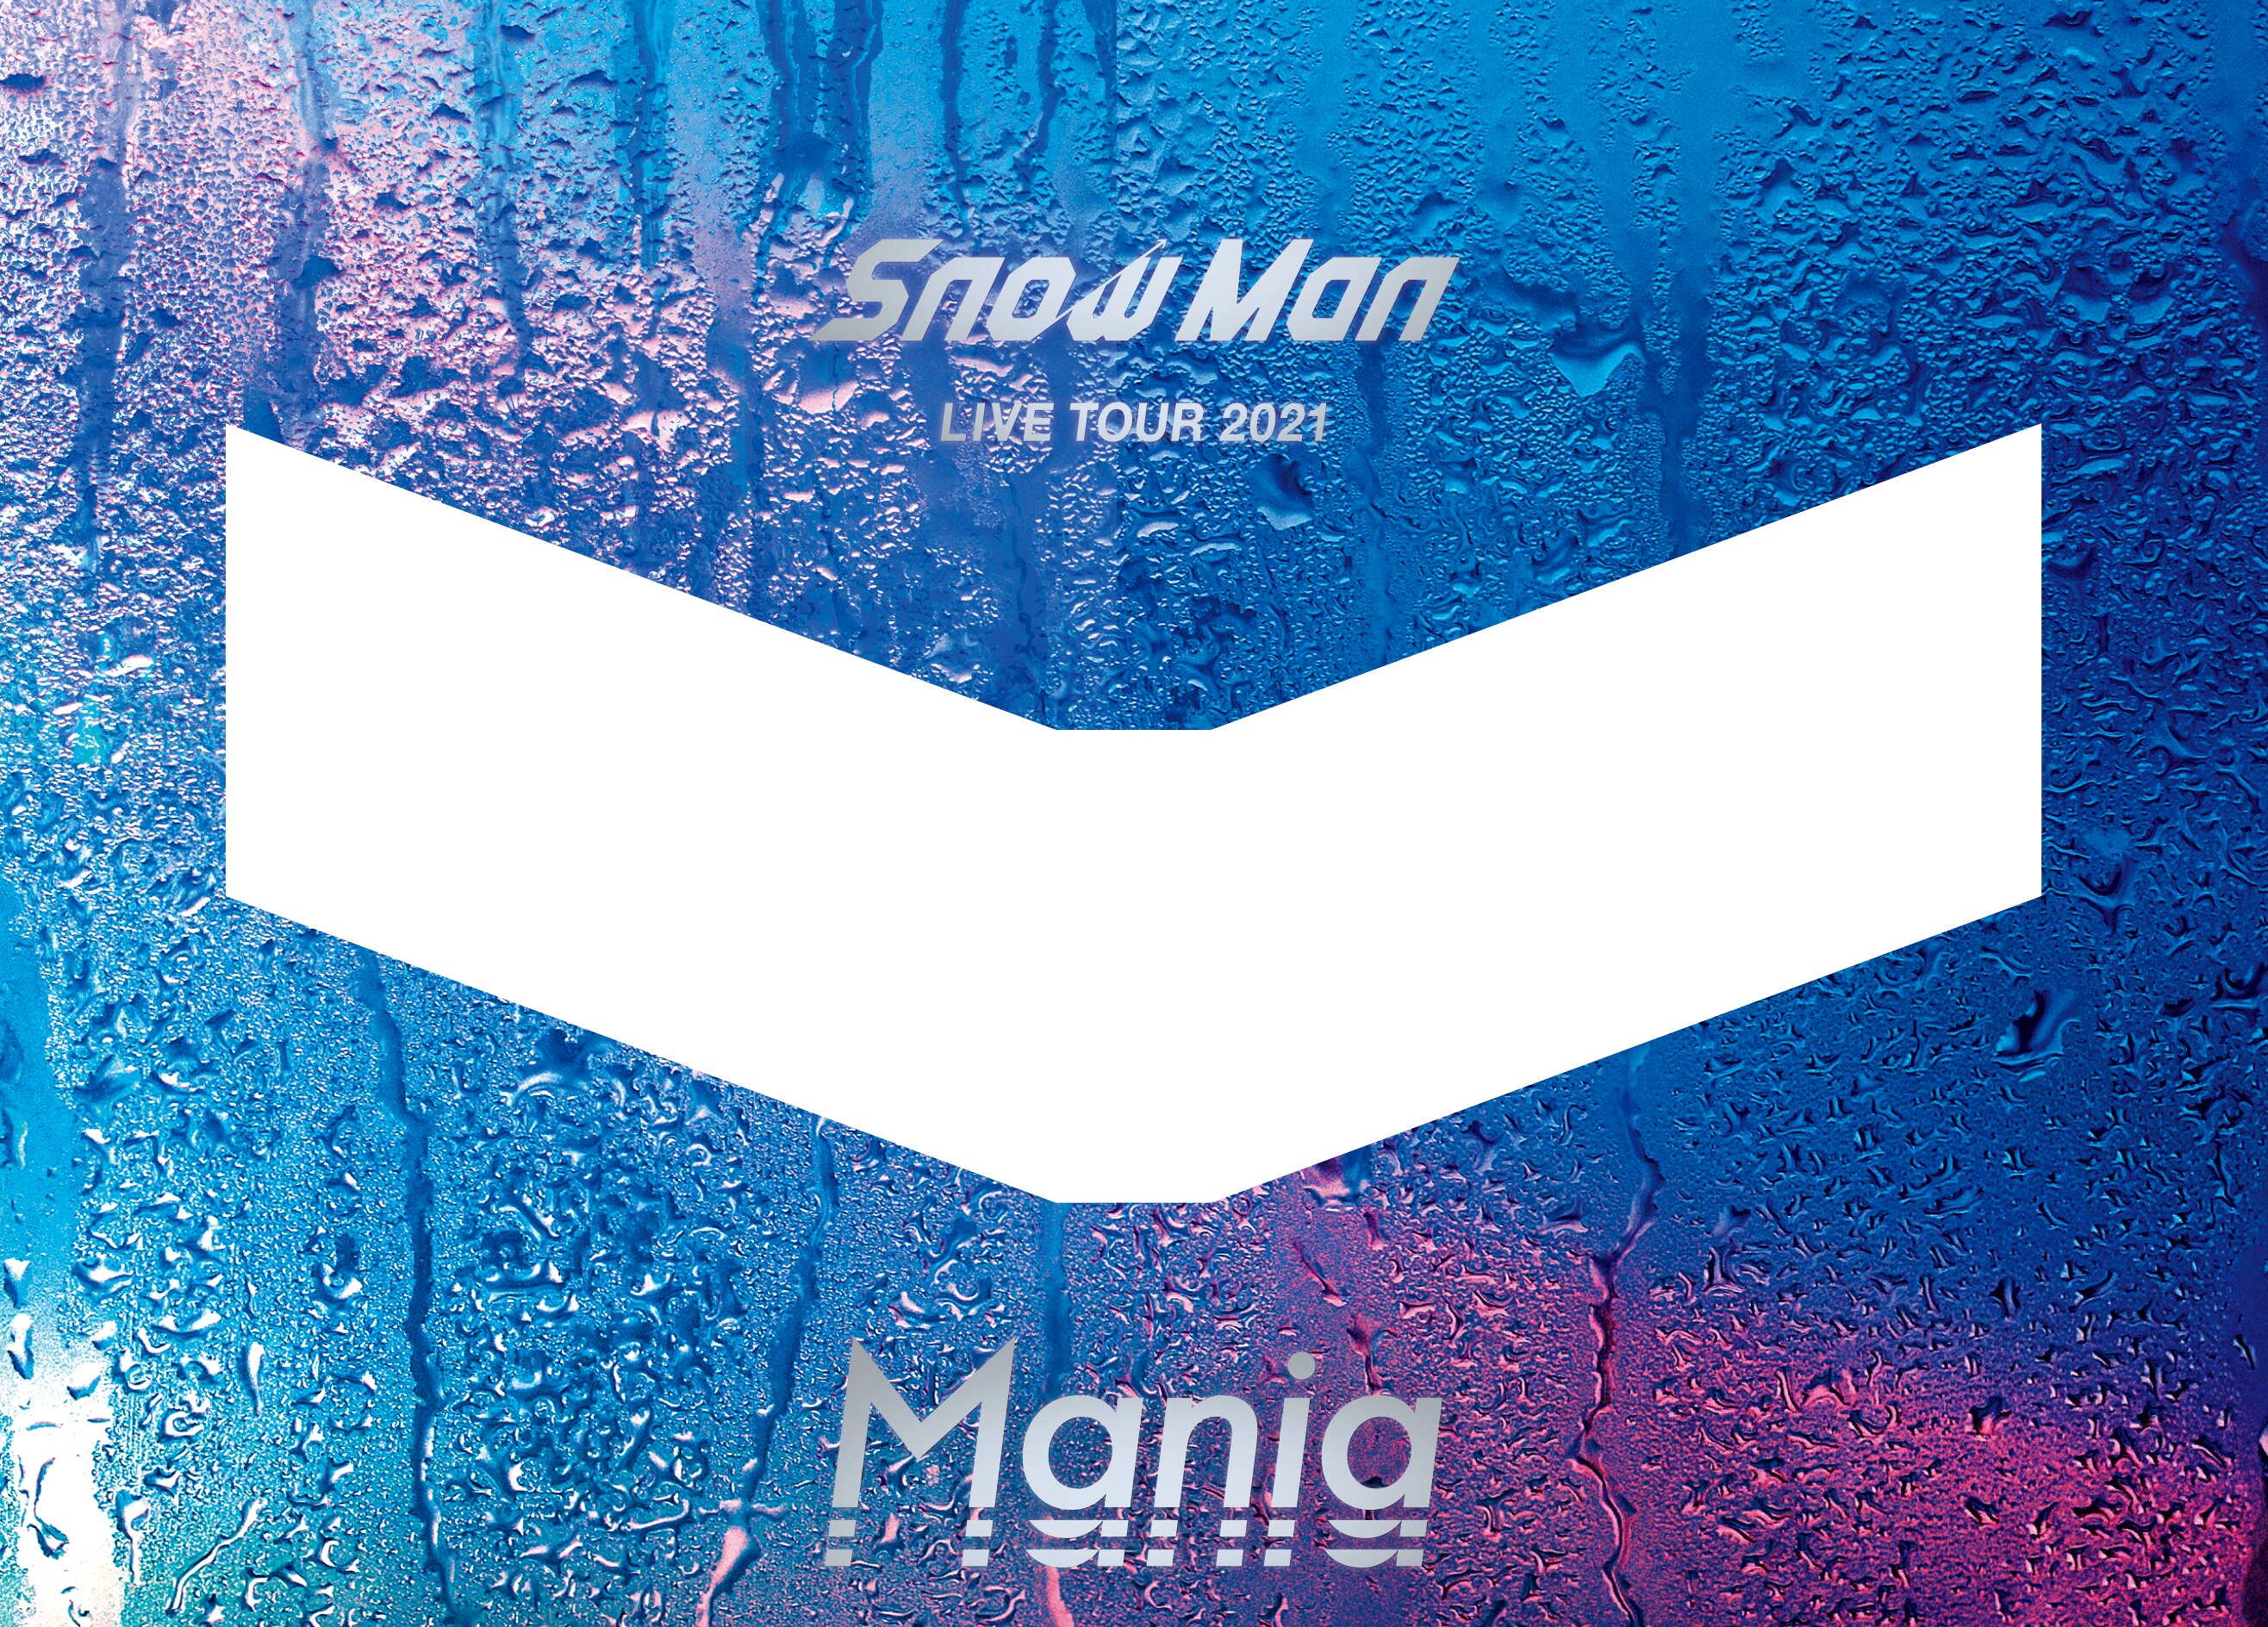 Snow Man LIVE TOUR 2021 Mania 初回盤Blu-ray | www.sportique.nu